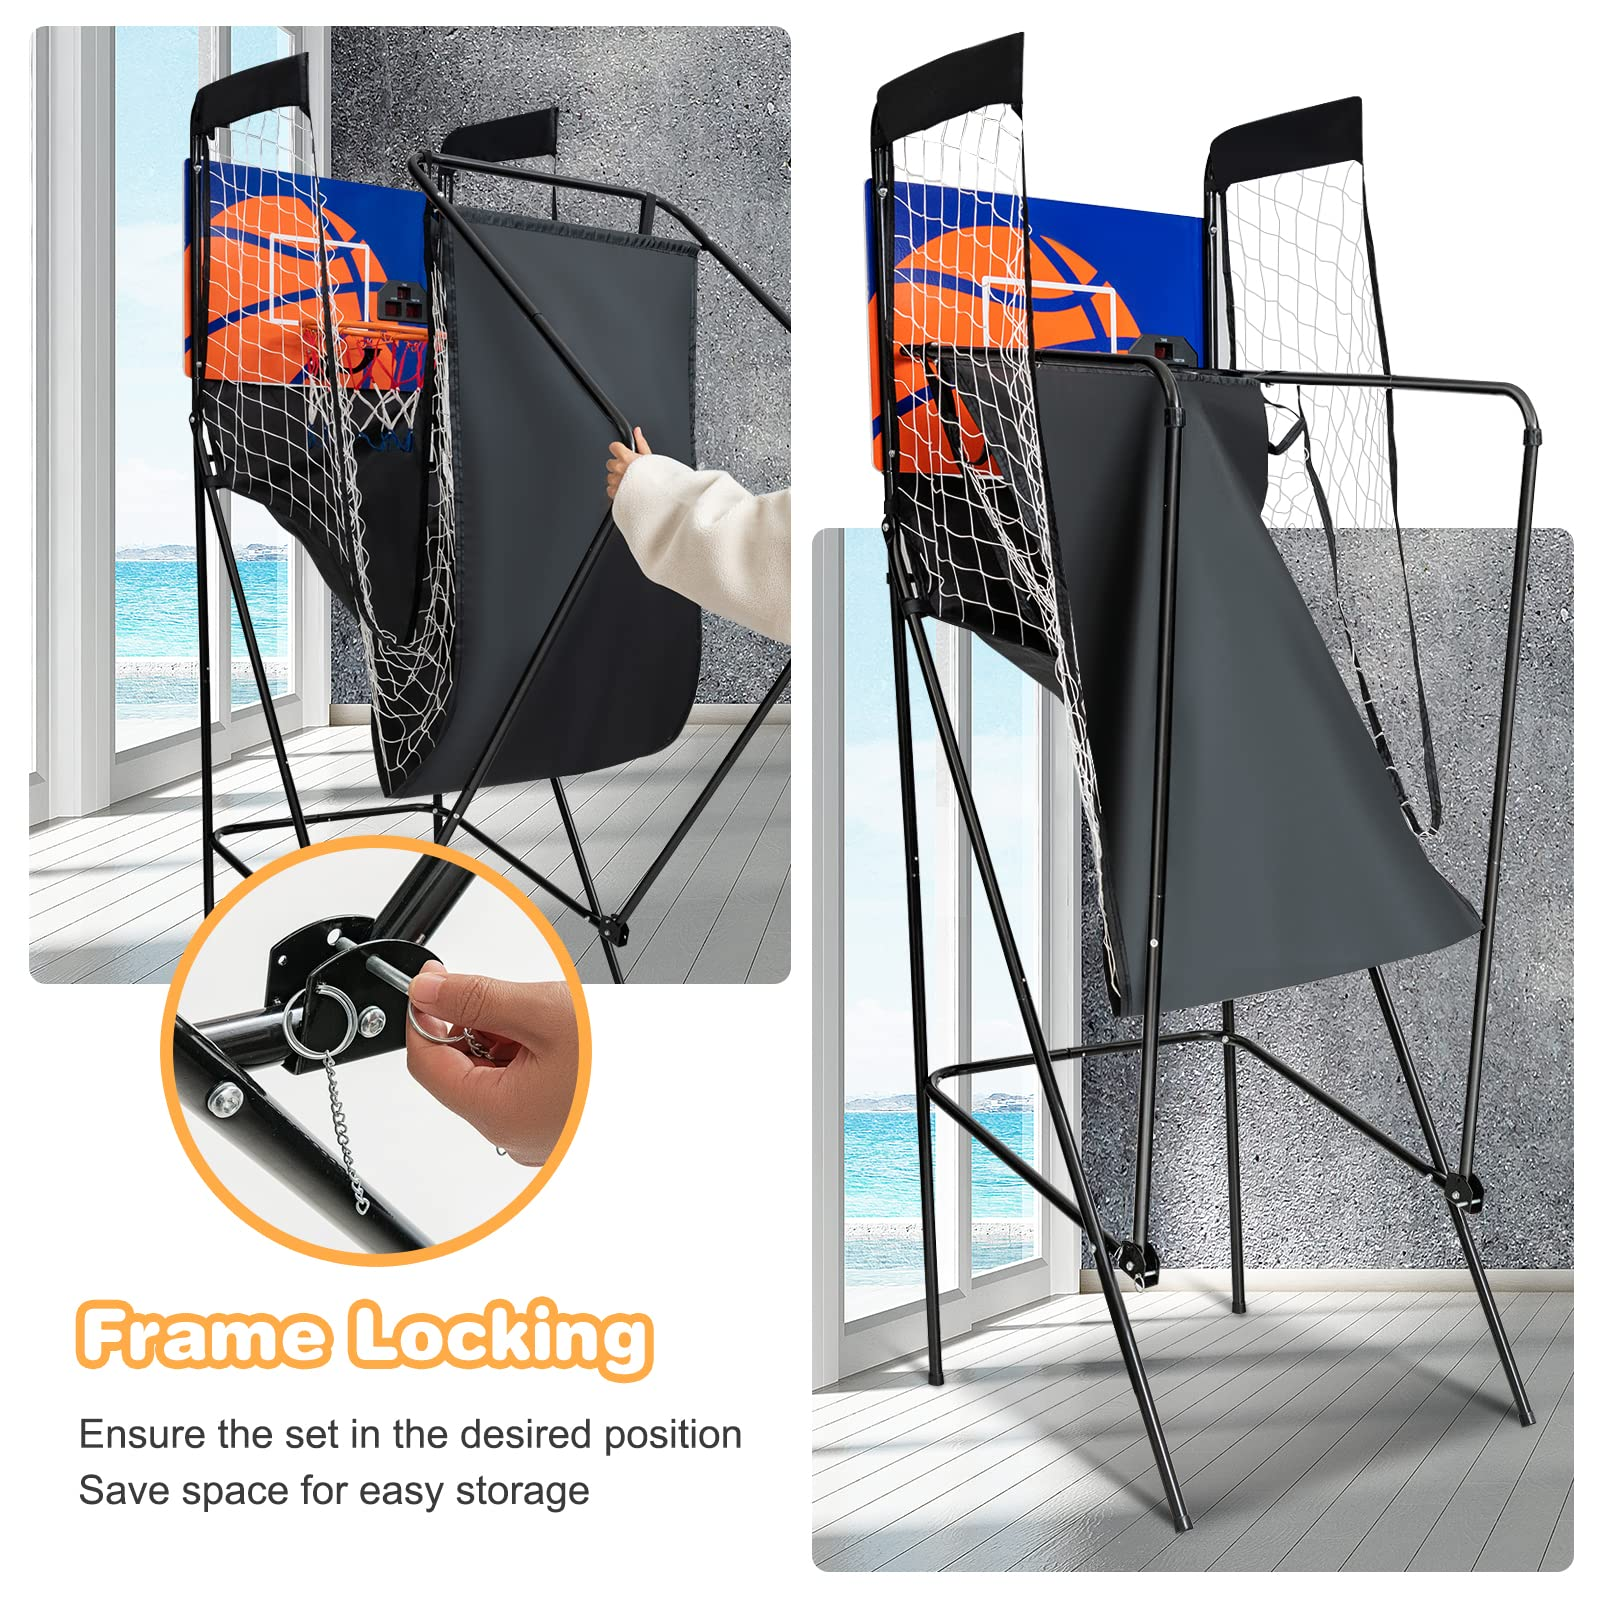 Giantex Foldable Electronic Arcade Basketball Game, with Electronic Scorer